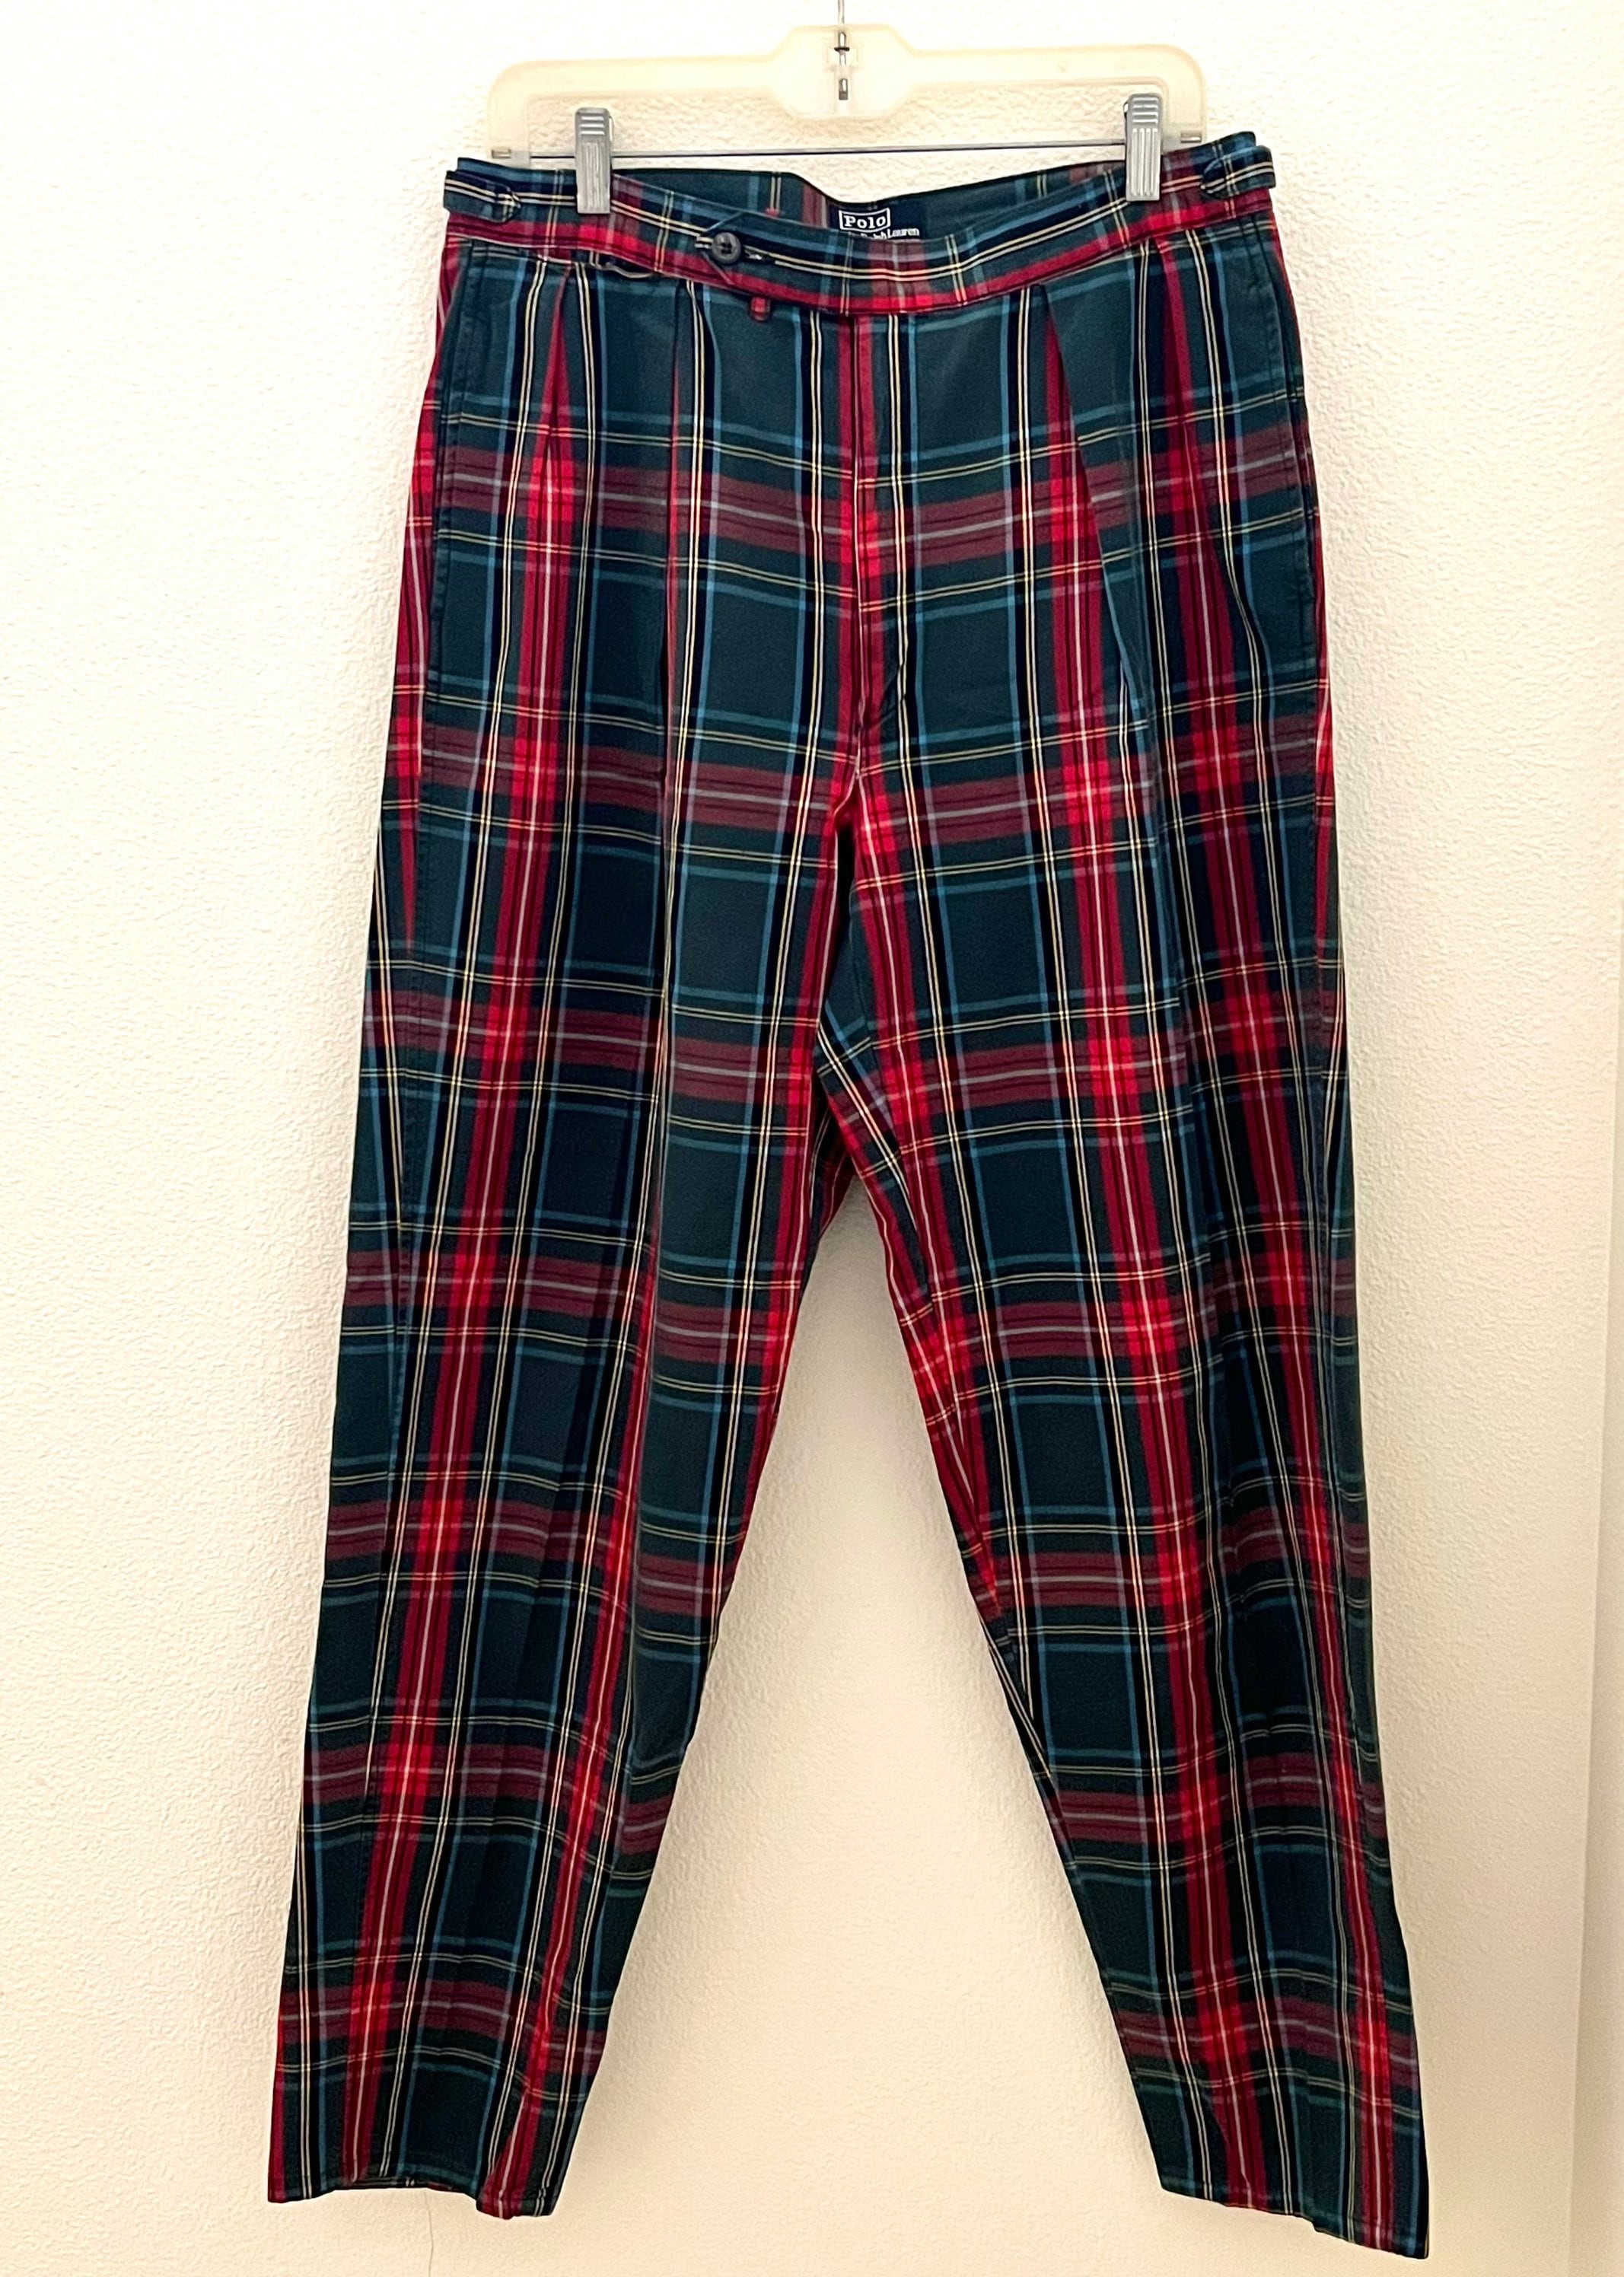 Vintage Ralph Lauren Polo Plaid Pants, 1980s Polo Hunter Green